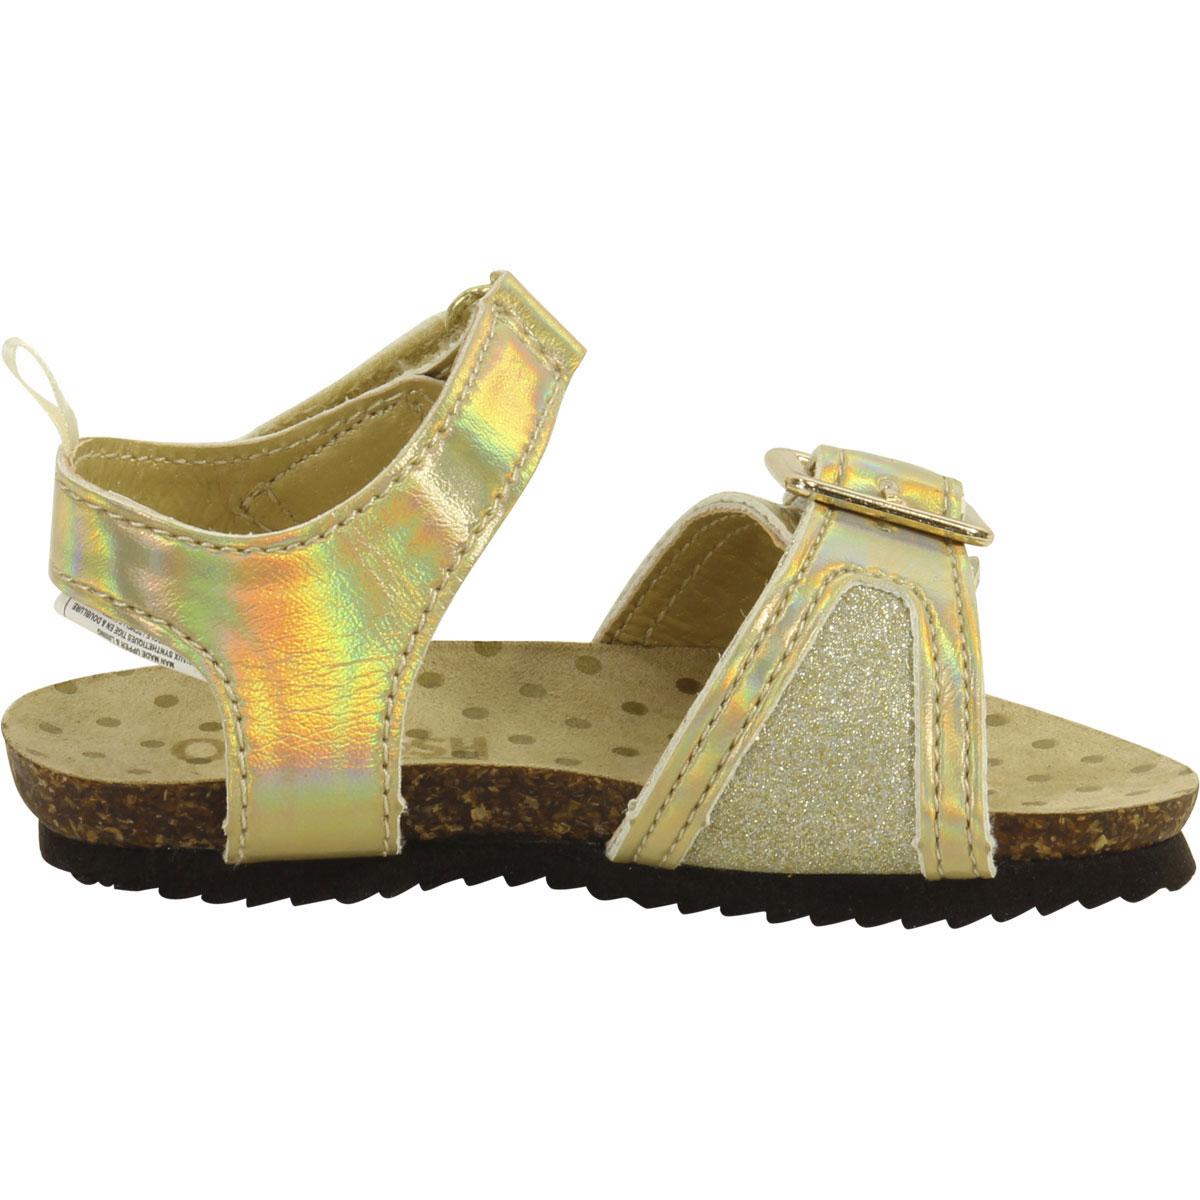 OshKosh B'gosh Toddler/Little Girl's Britt Sparkle Sandals Shoes ...